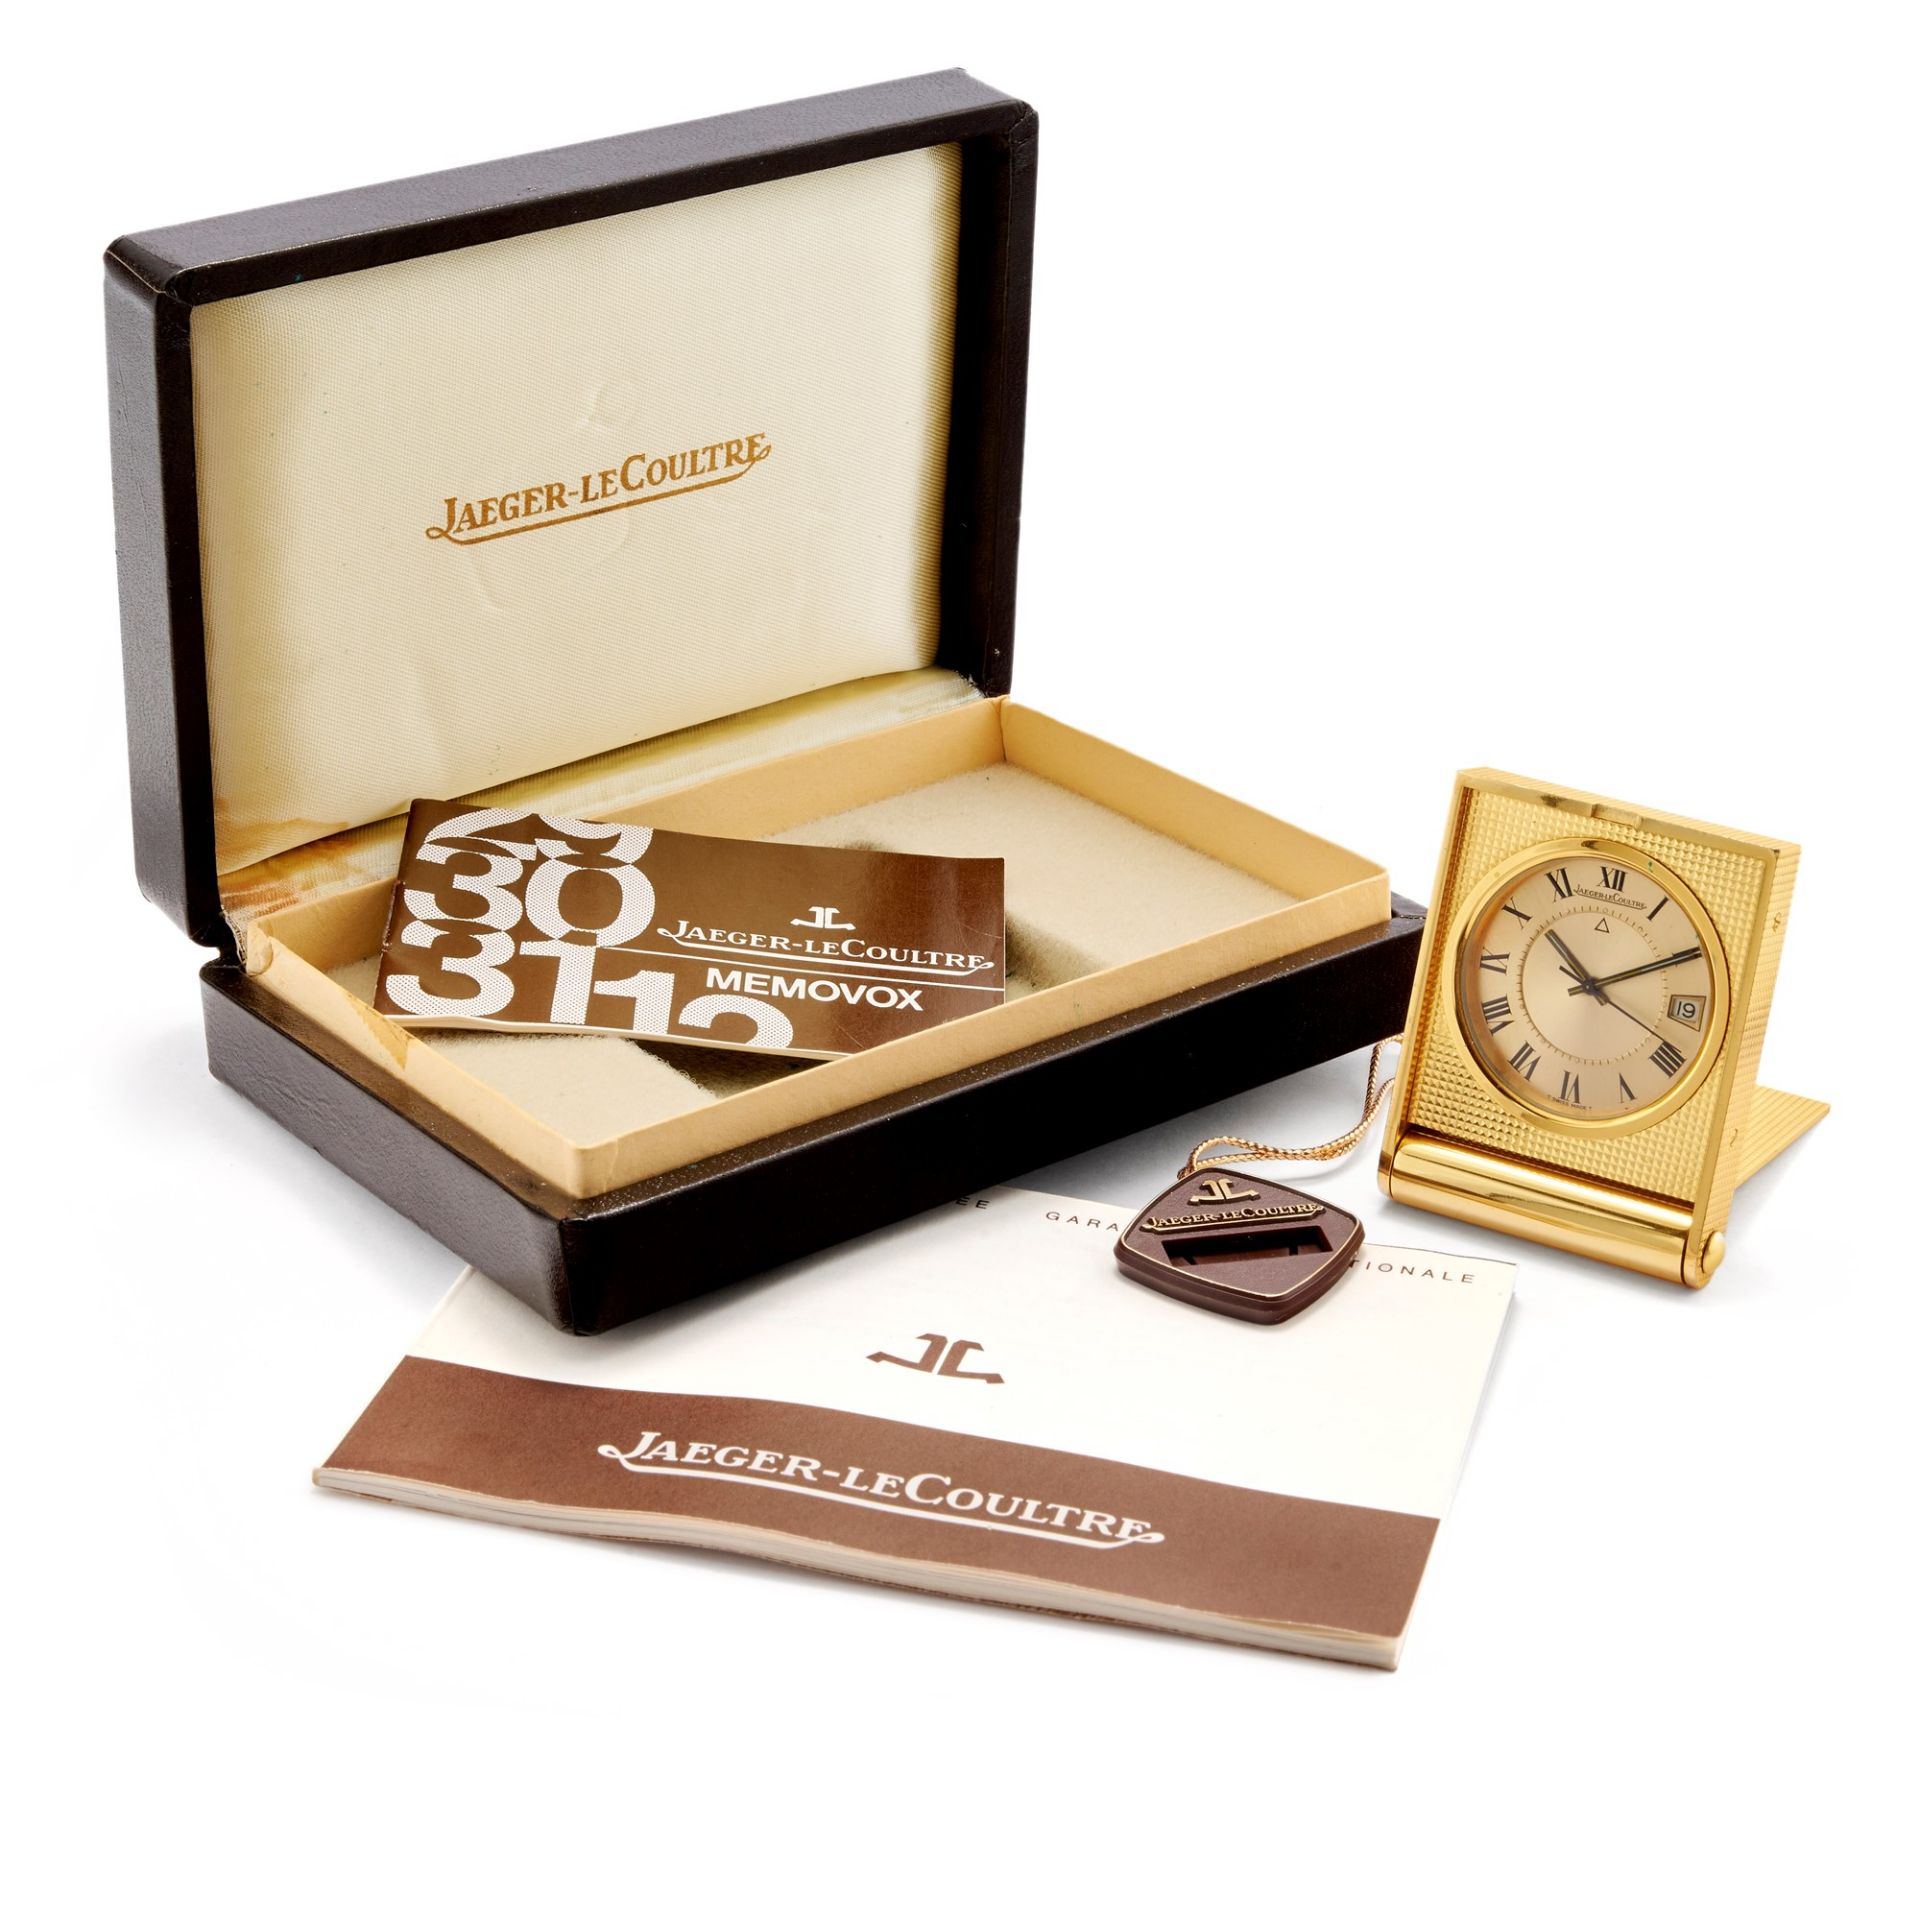 Jaeger-LeCoultre Memovox purse watch, ‘60s